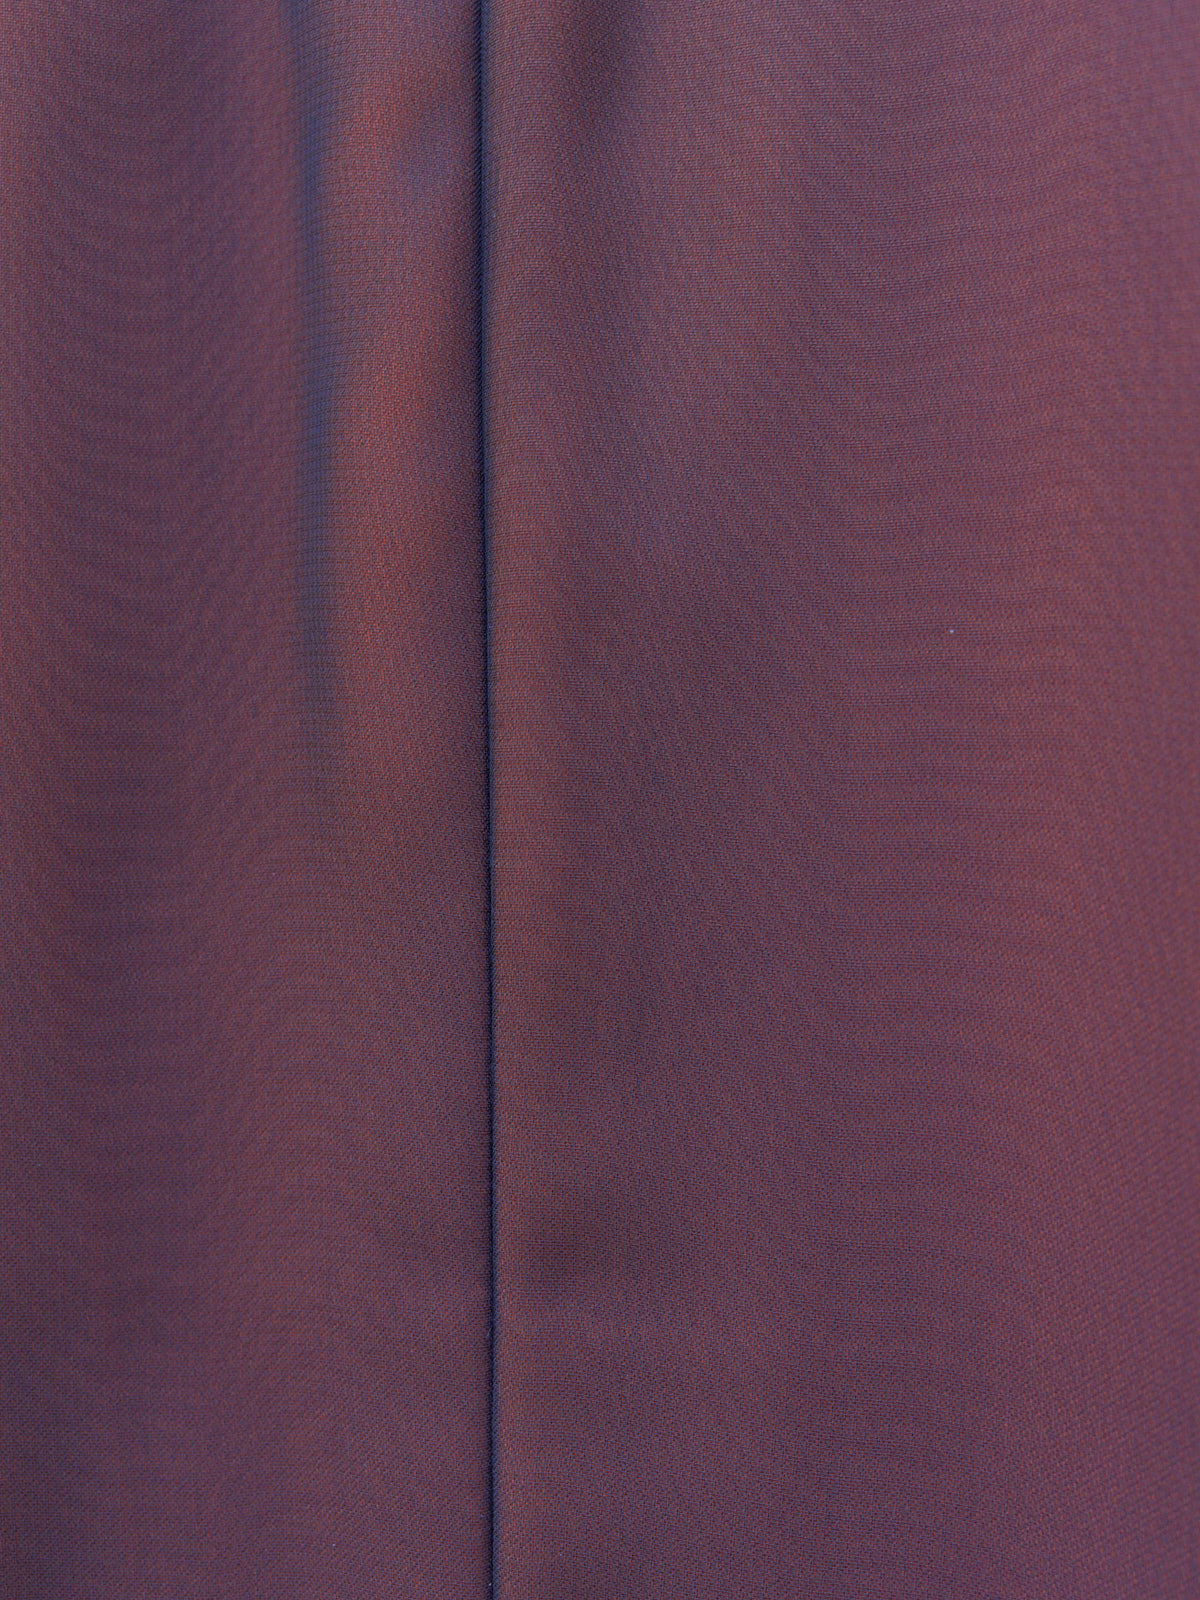 Dirk Bikkembergs burgundy mesh layered 3 button blazer - womens 42 40 38